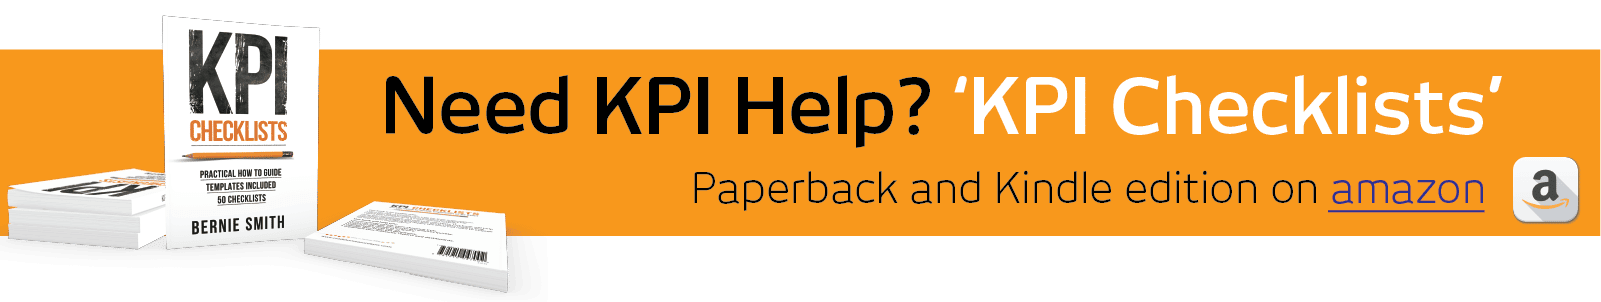 Need KPI help - KPI Checklists book